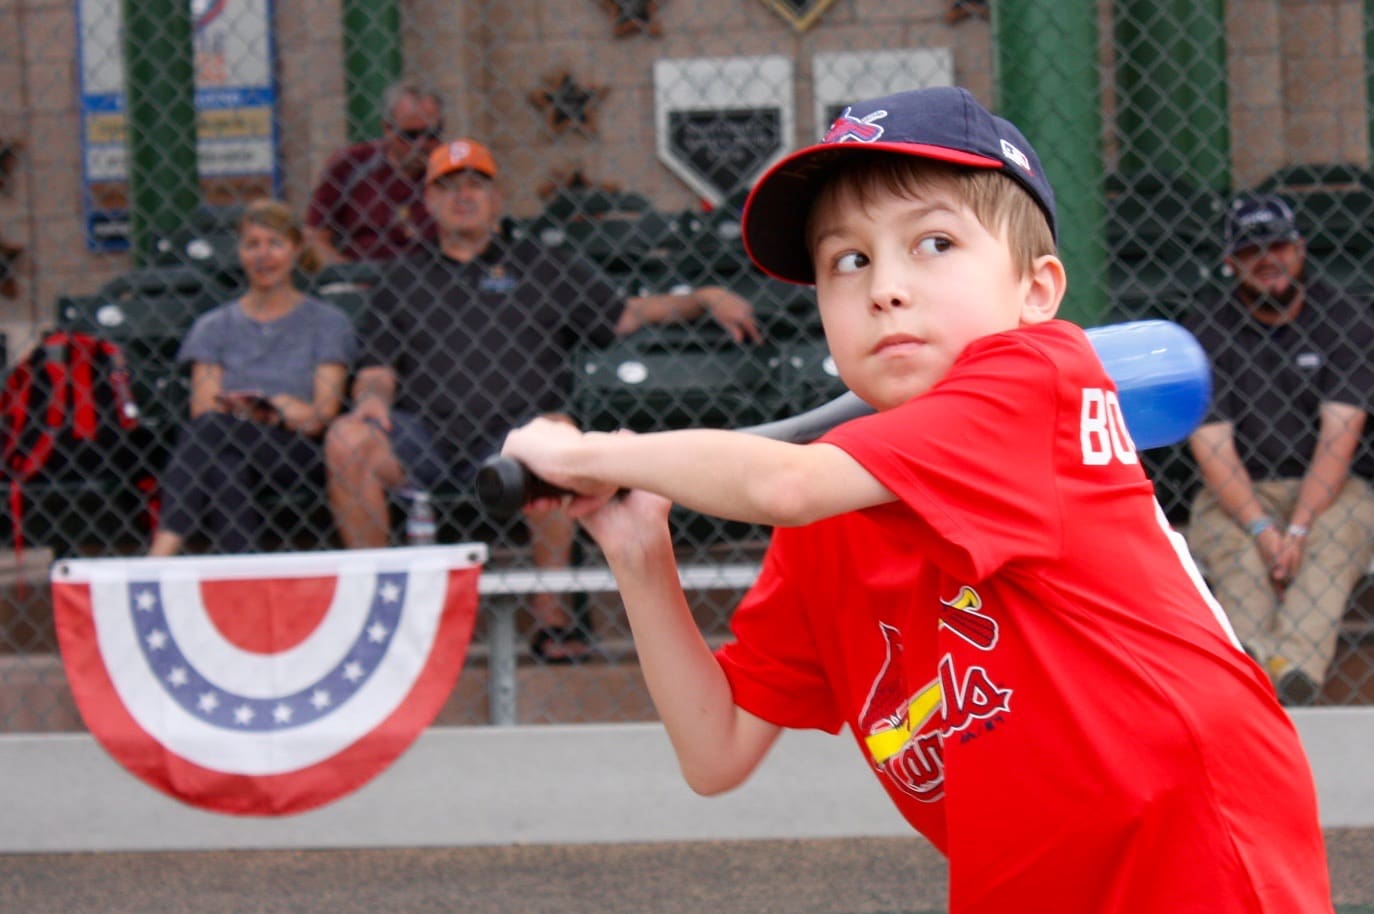 A young boy swinging a baseball bat.